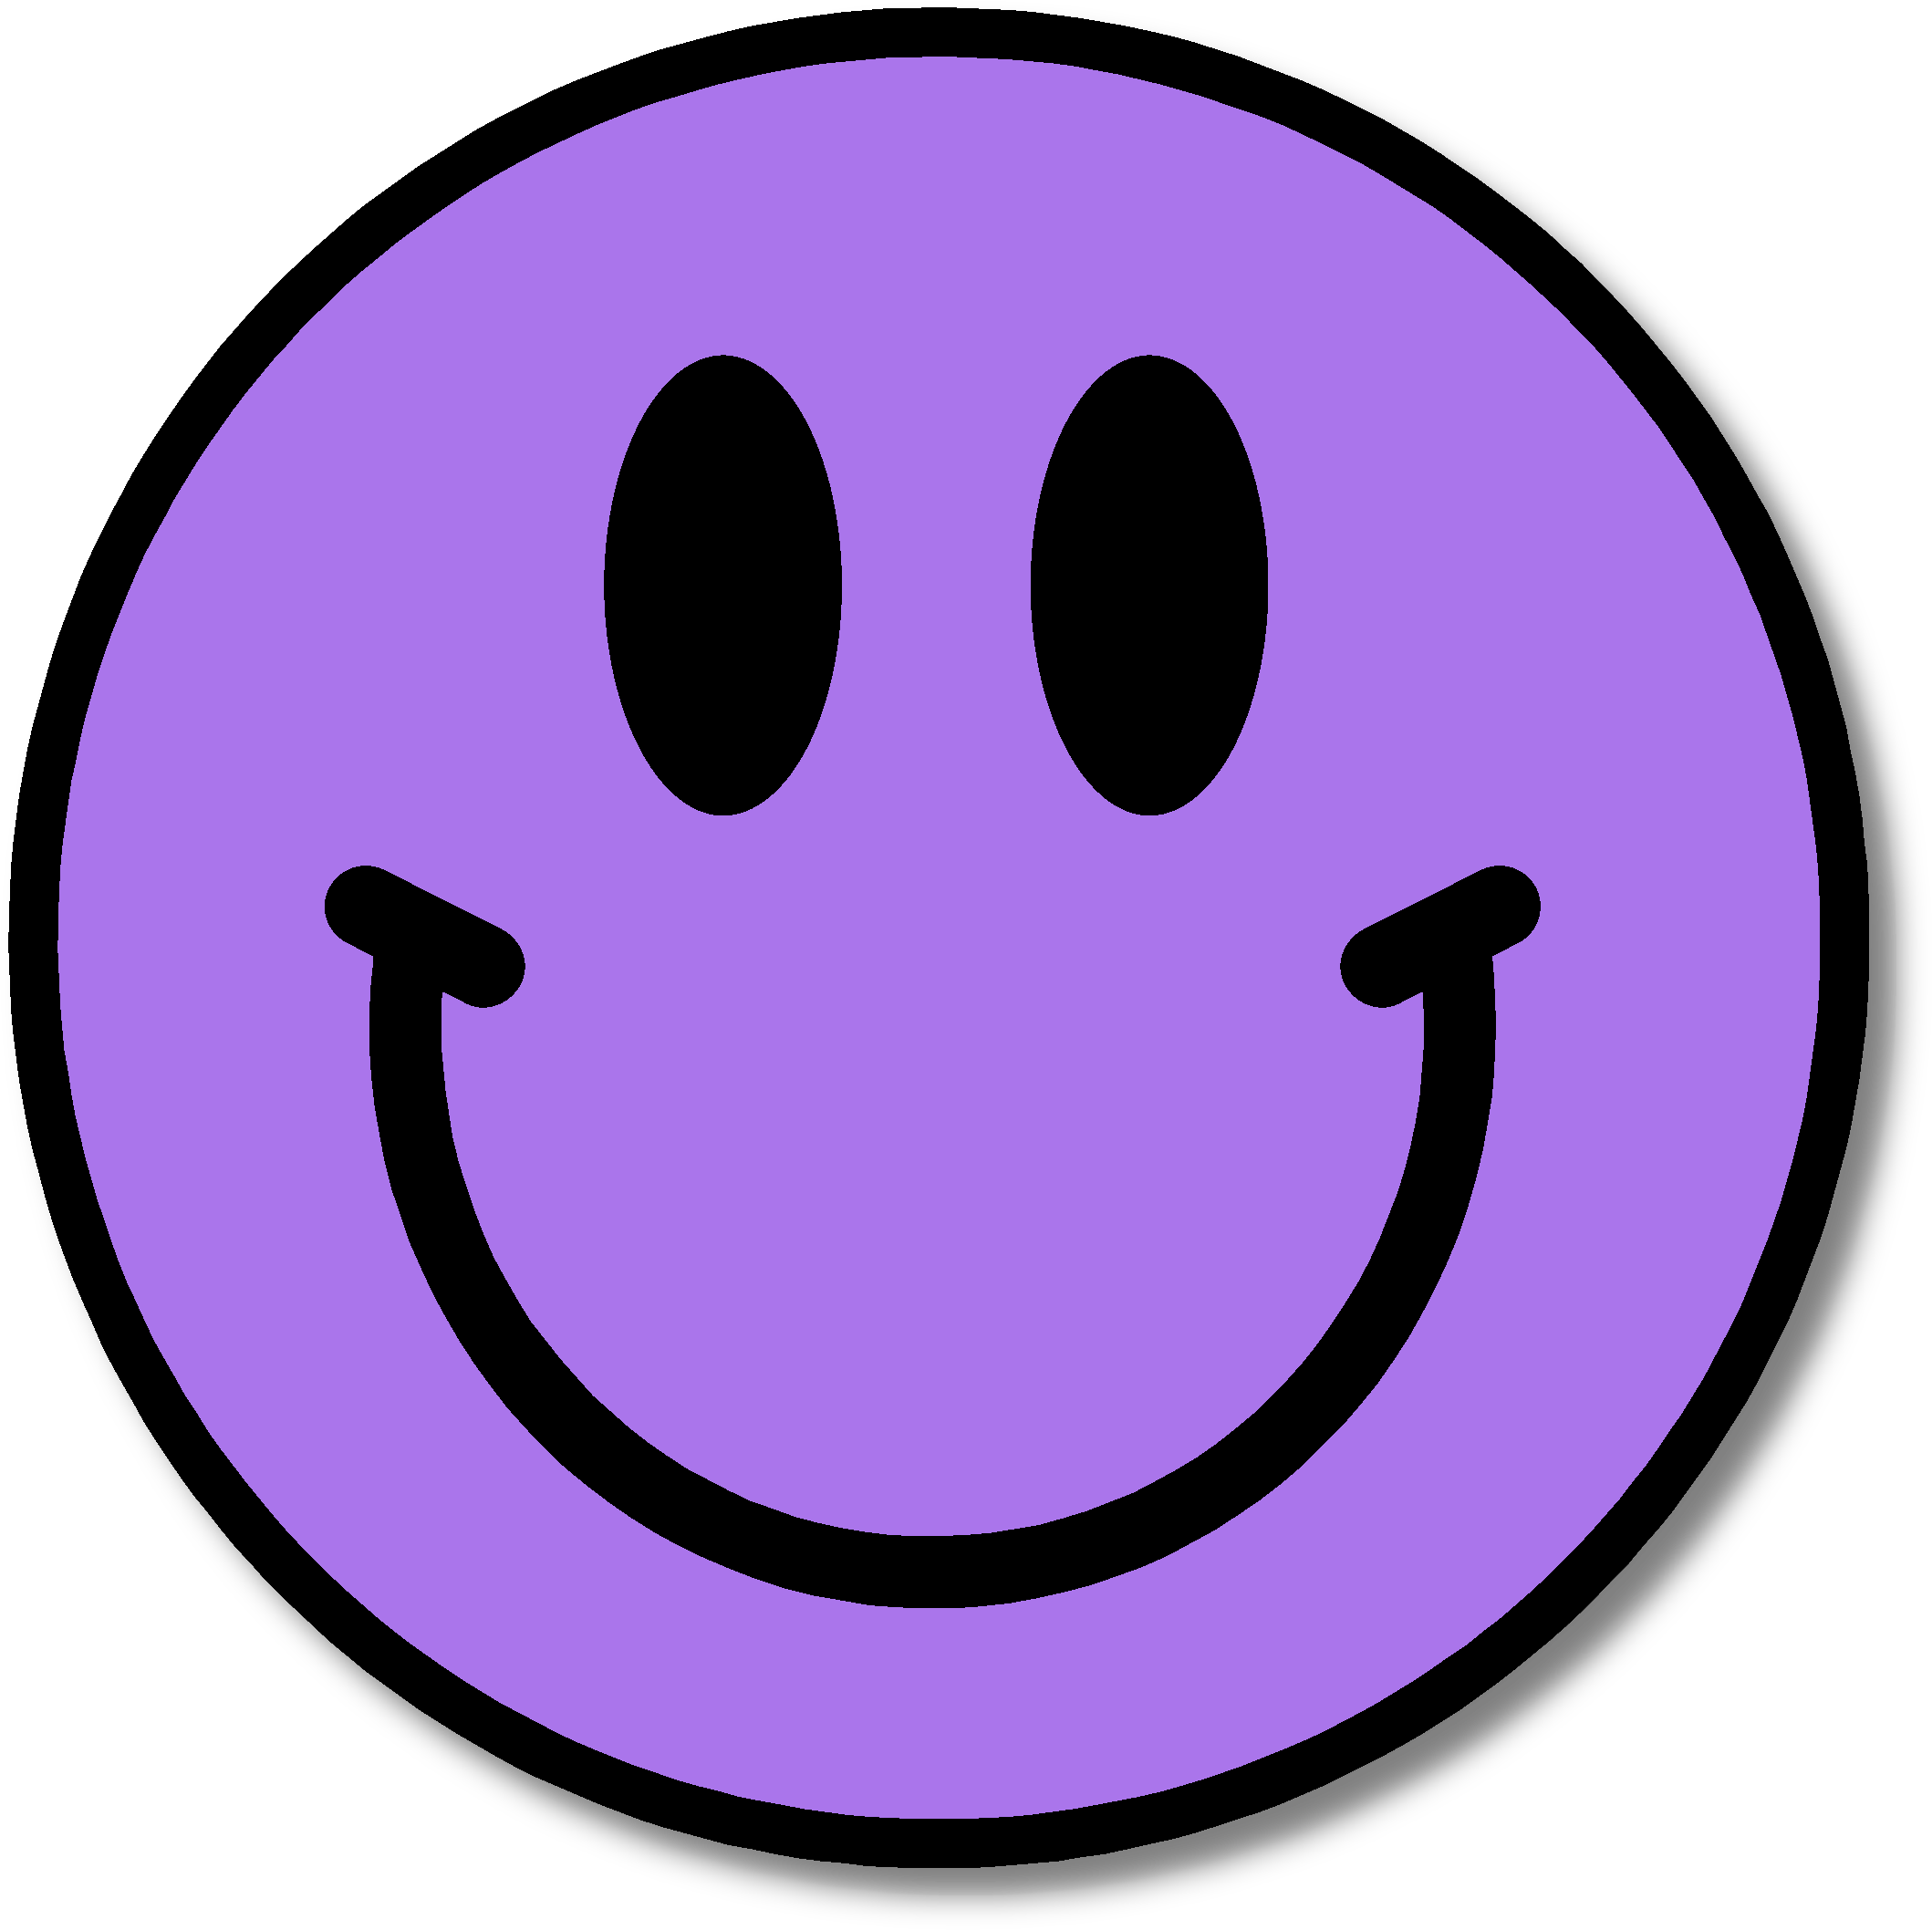 Purple Smiley Face Clipart